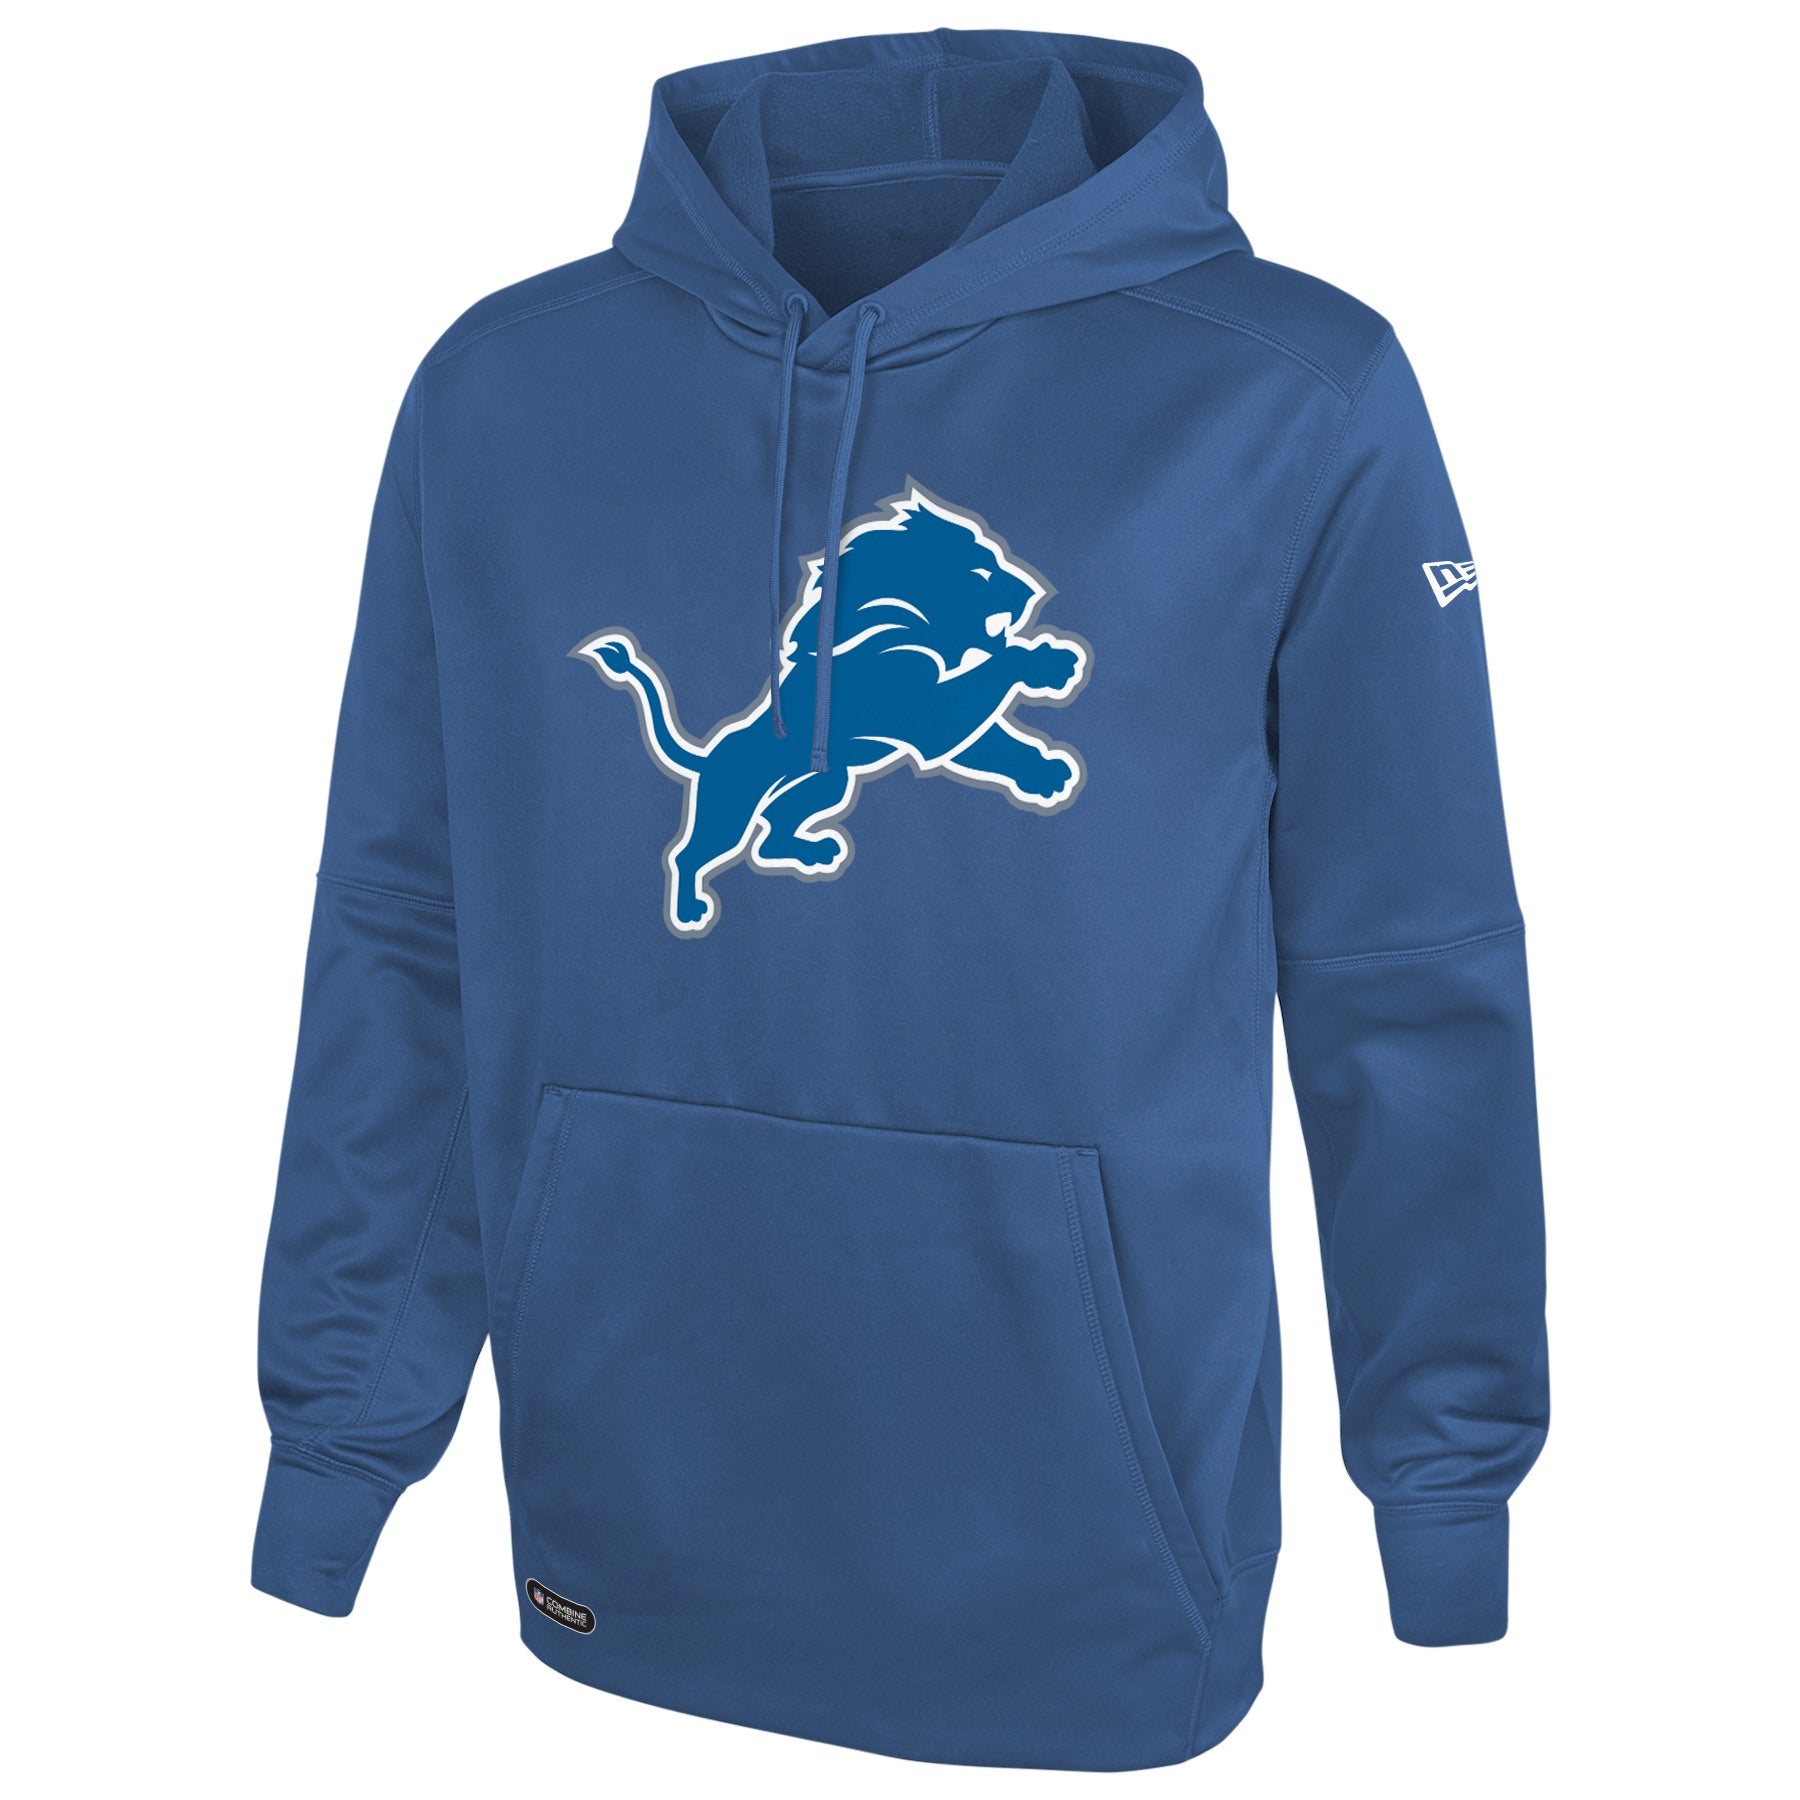 Official Detroit Lions Hoodies, Lions Sweatshirts, Fleece